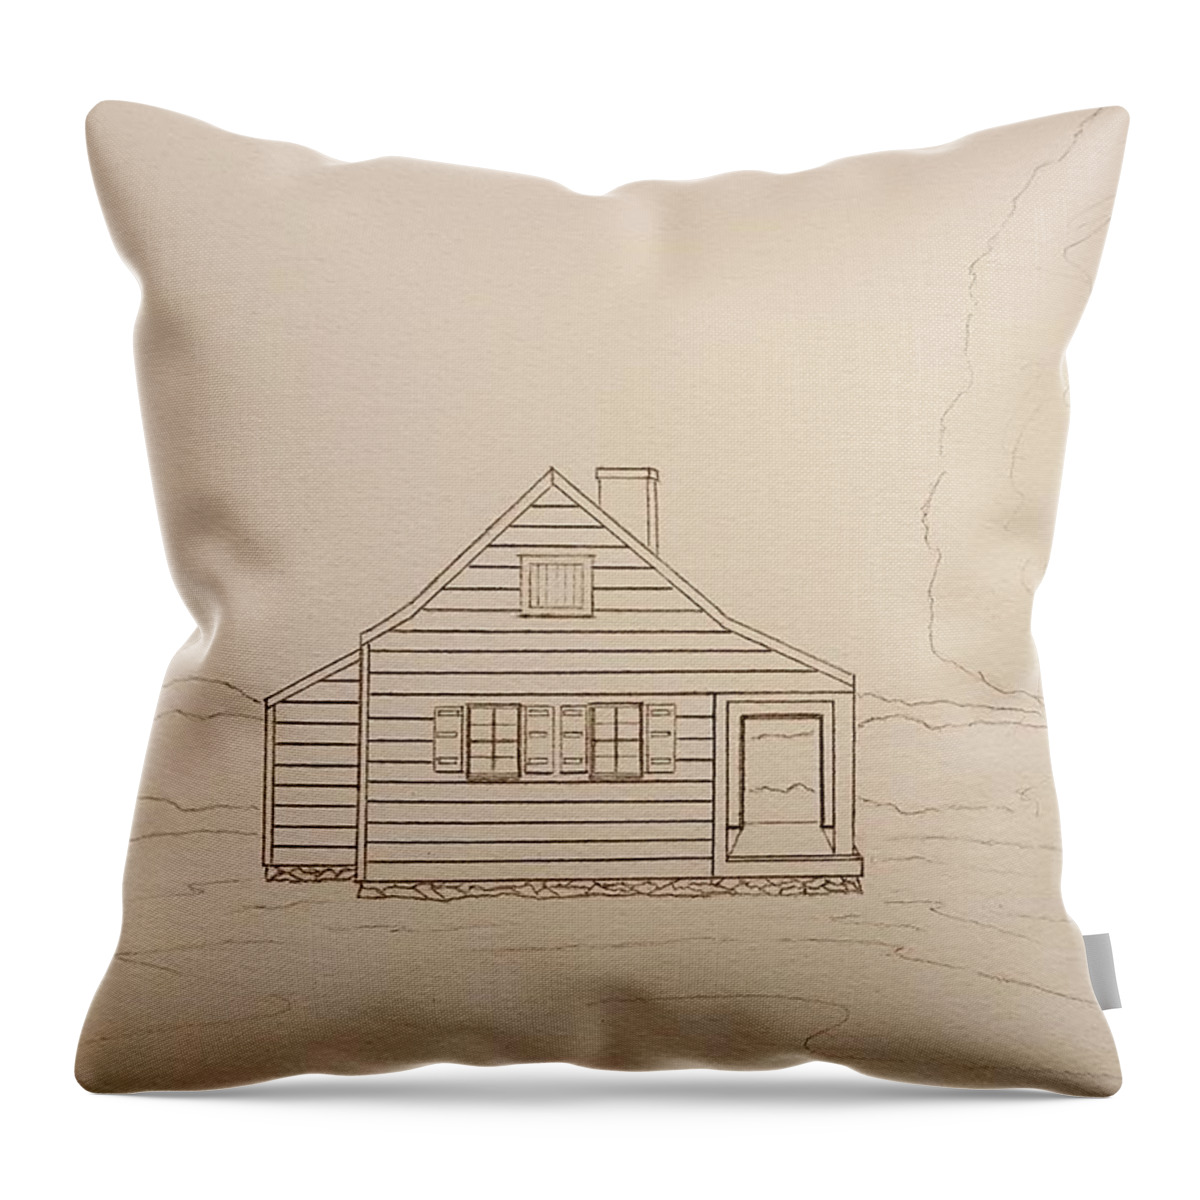 Sketch Throw Pillow featuring the drawing Saratoga Farmhouse by John Klobucher